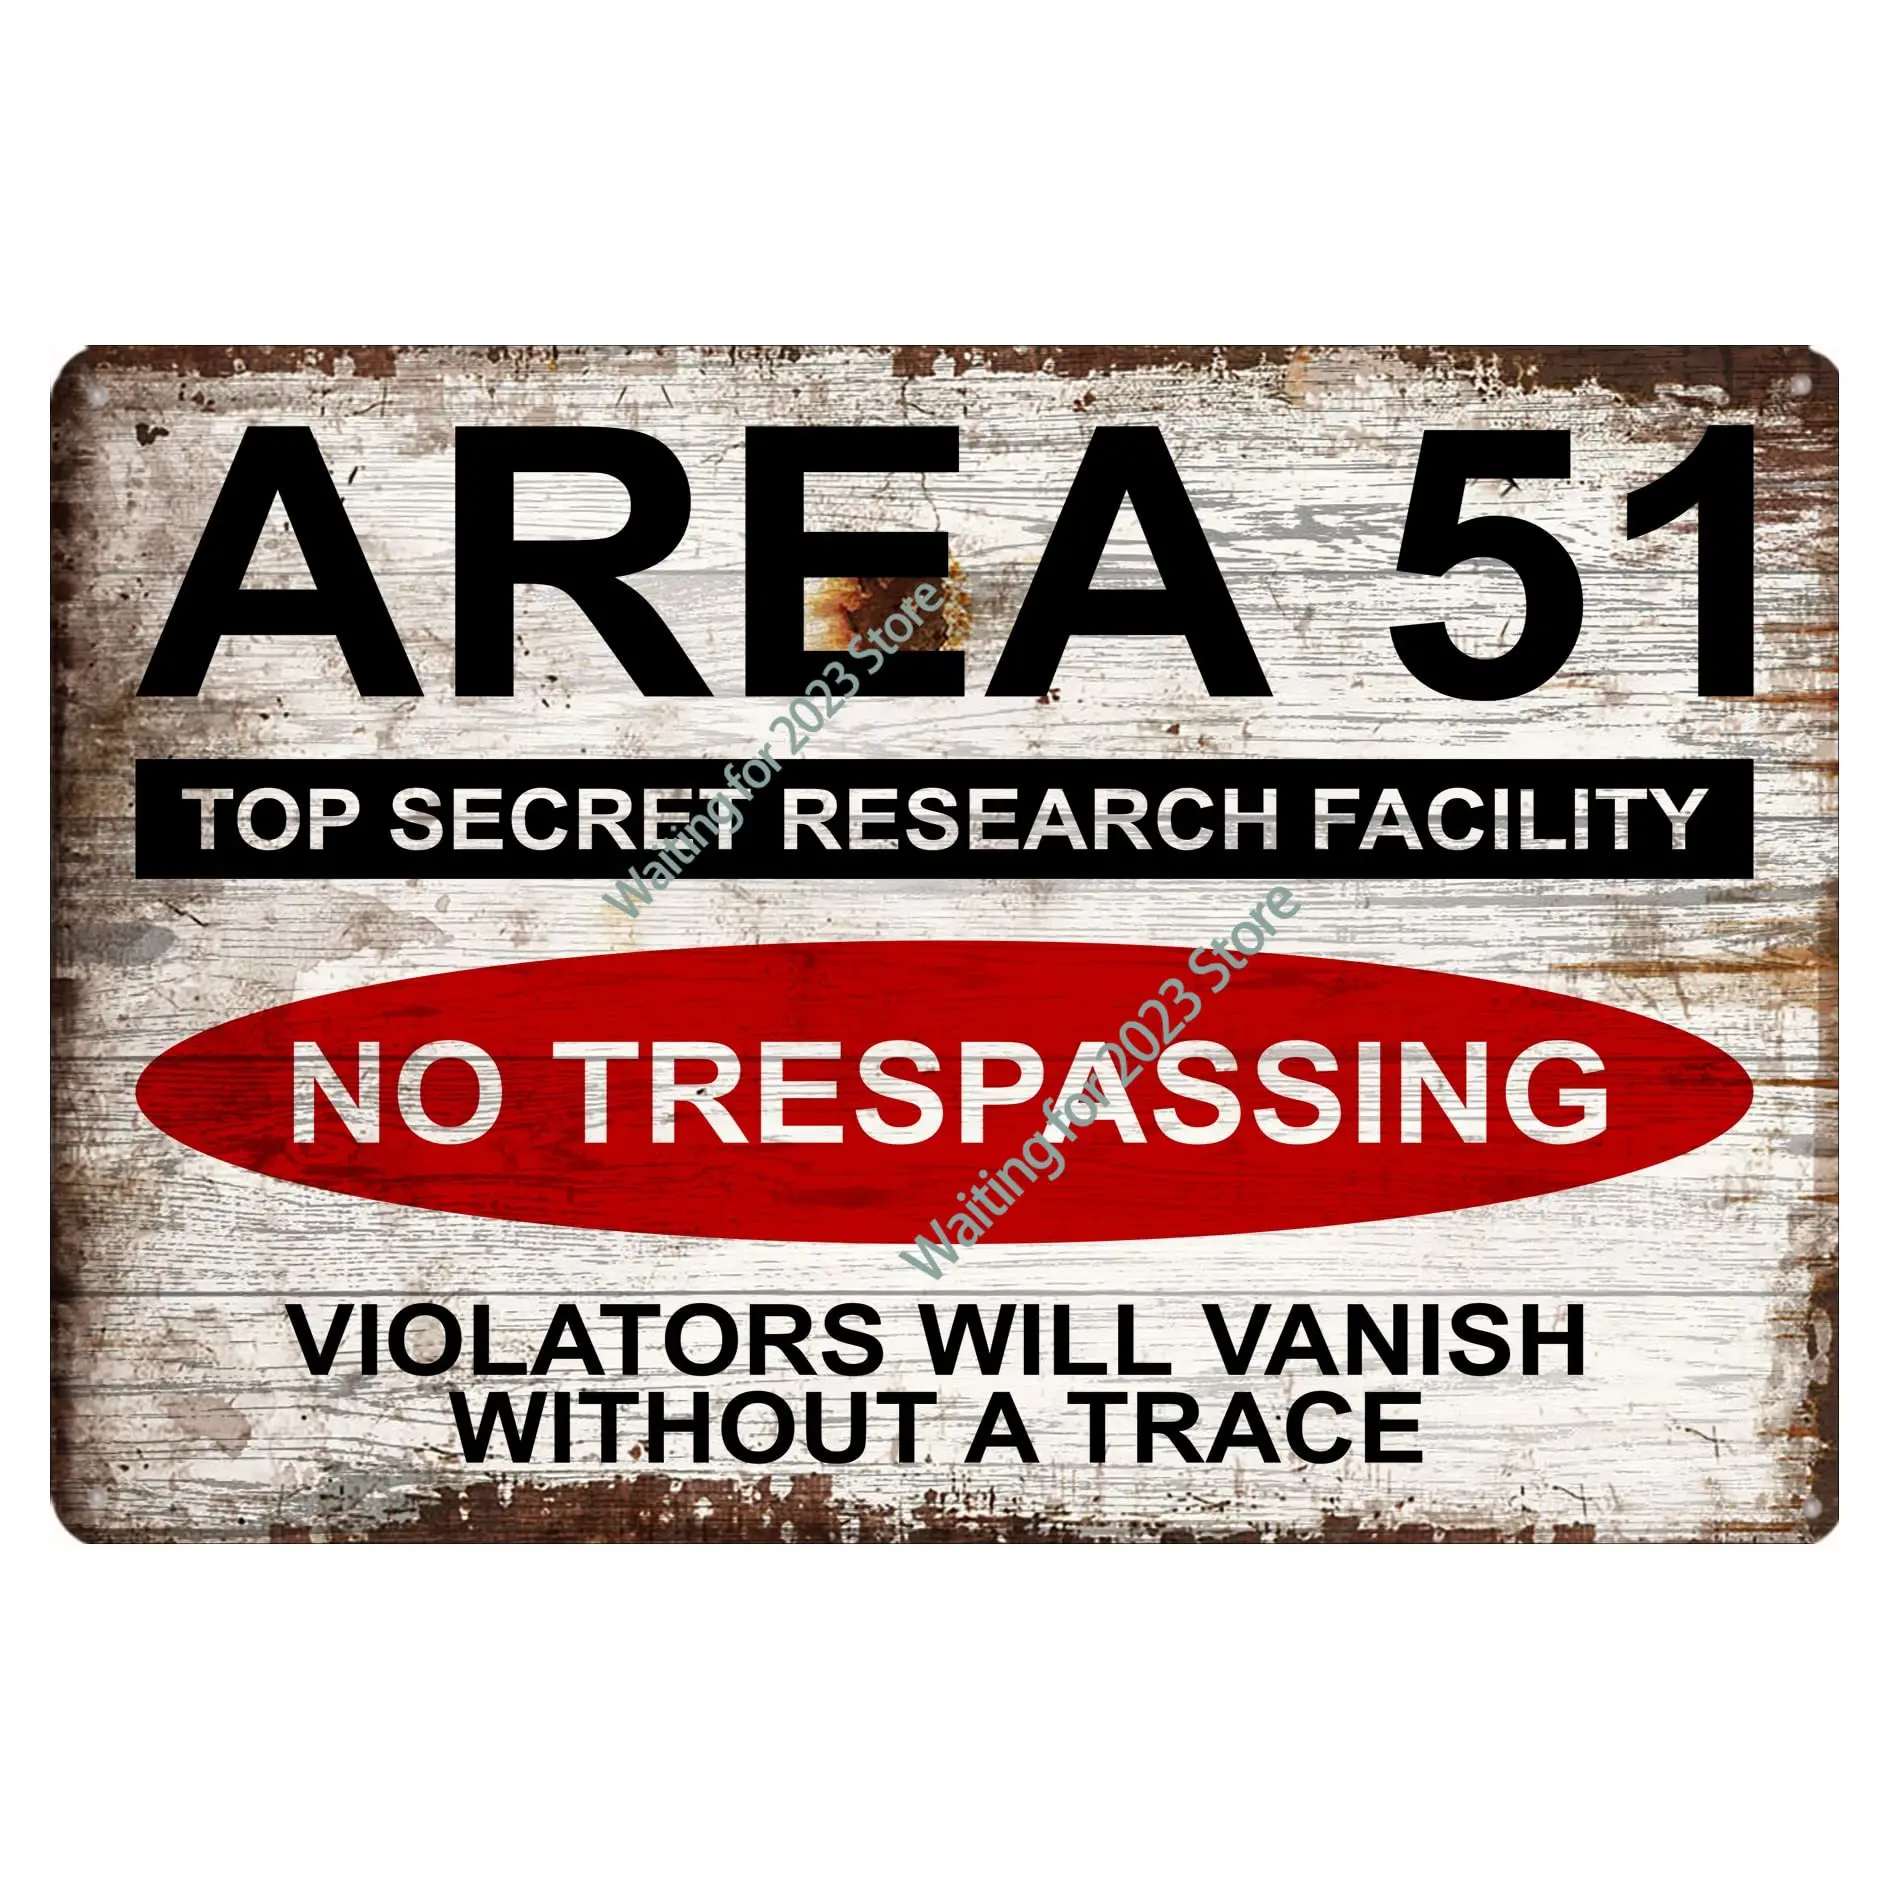 

Area 51 Vintage Tin Sign No Trespassing Metal Plaque Wall for Outdoor Bar Cafe Retro Home Decor 12x8 Inch Vintage Home Decor